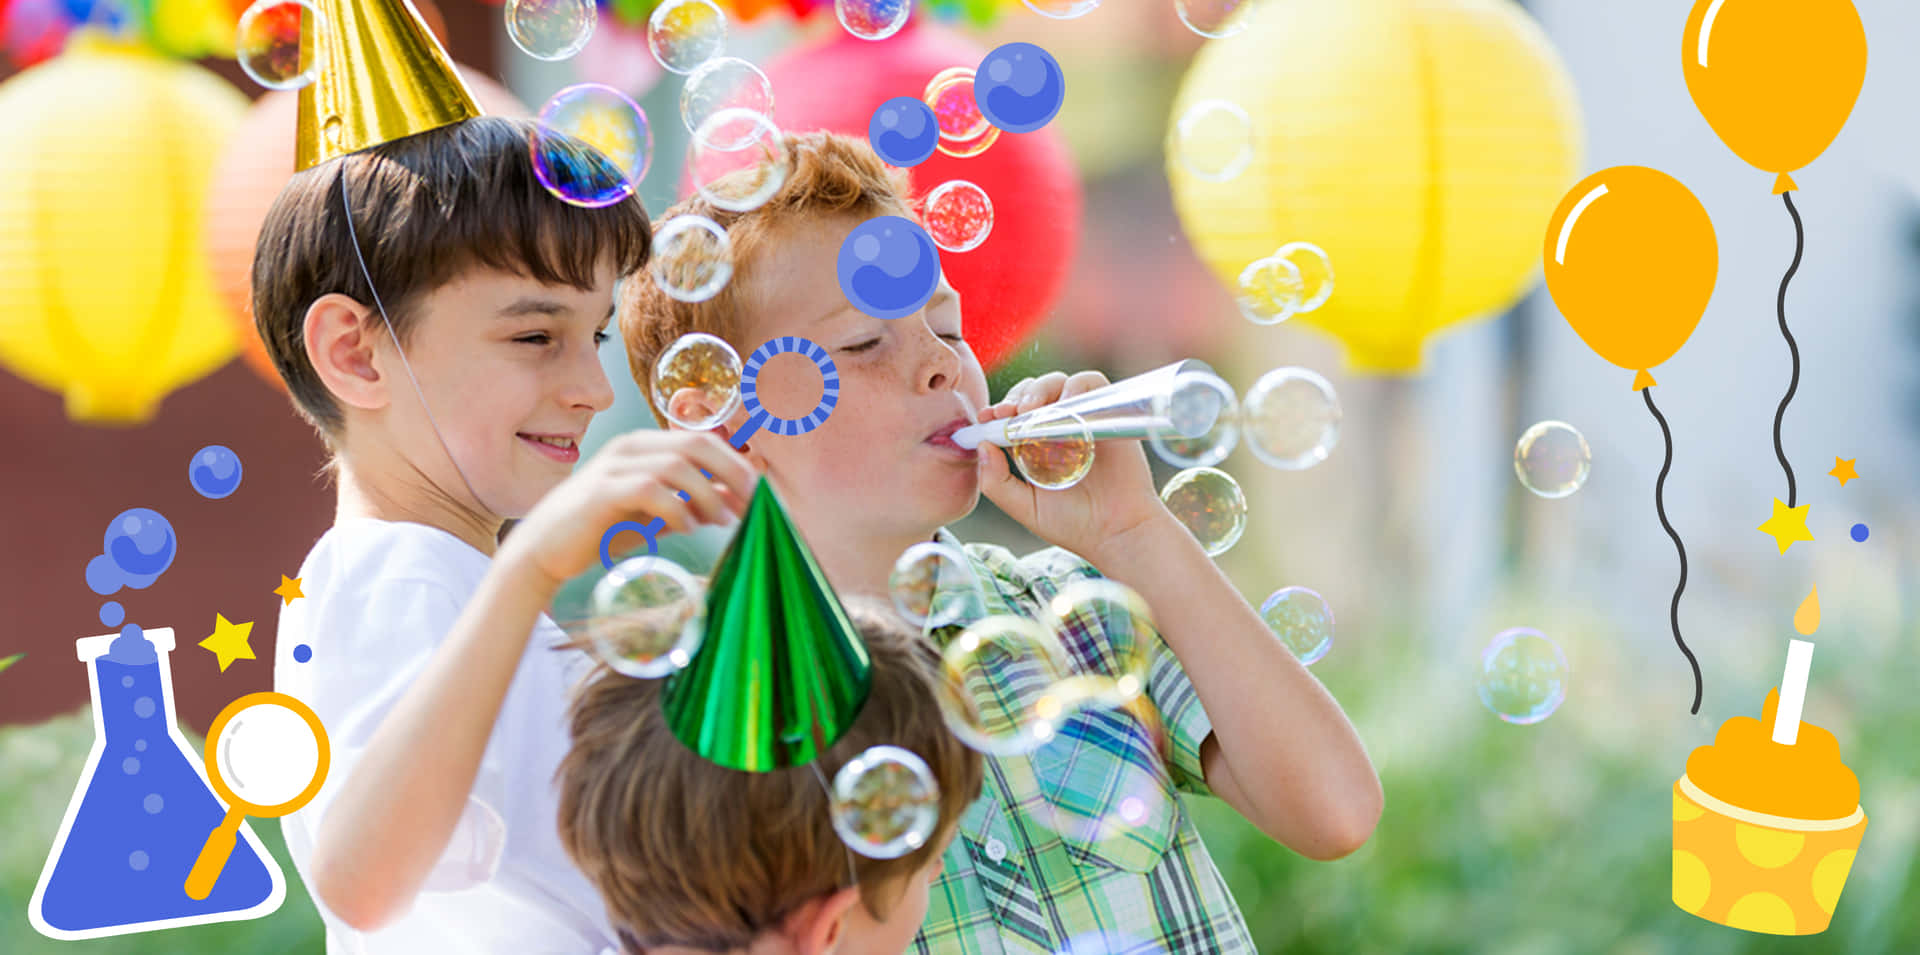 Brightly Colored Bubbles Add Fun to Any Occasion